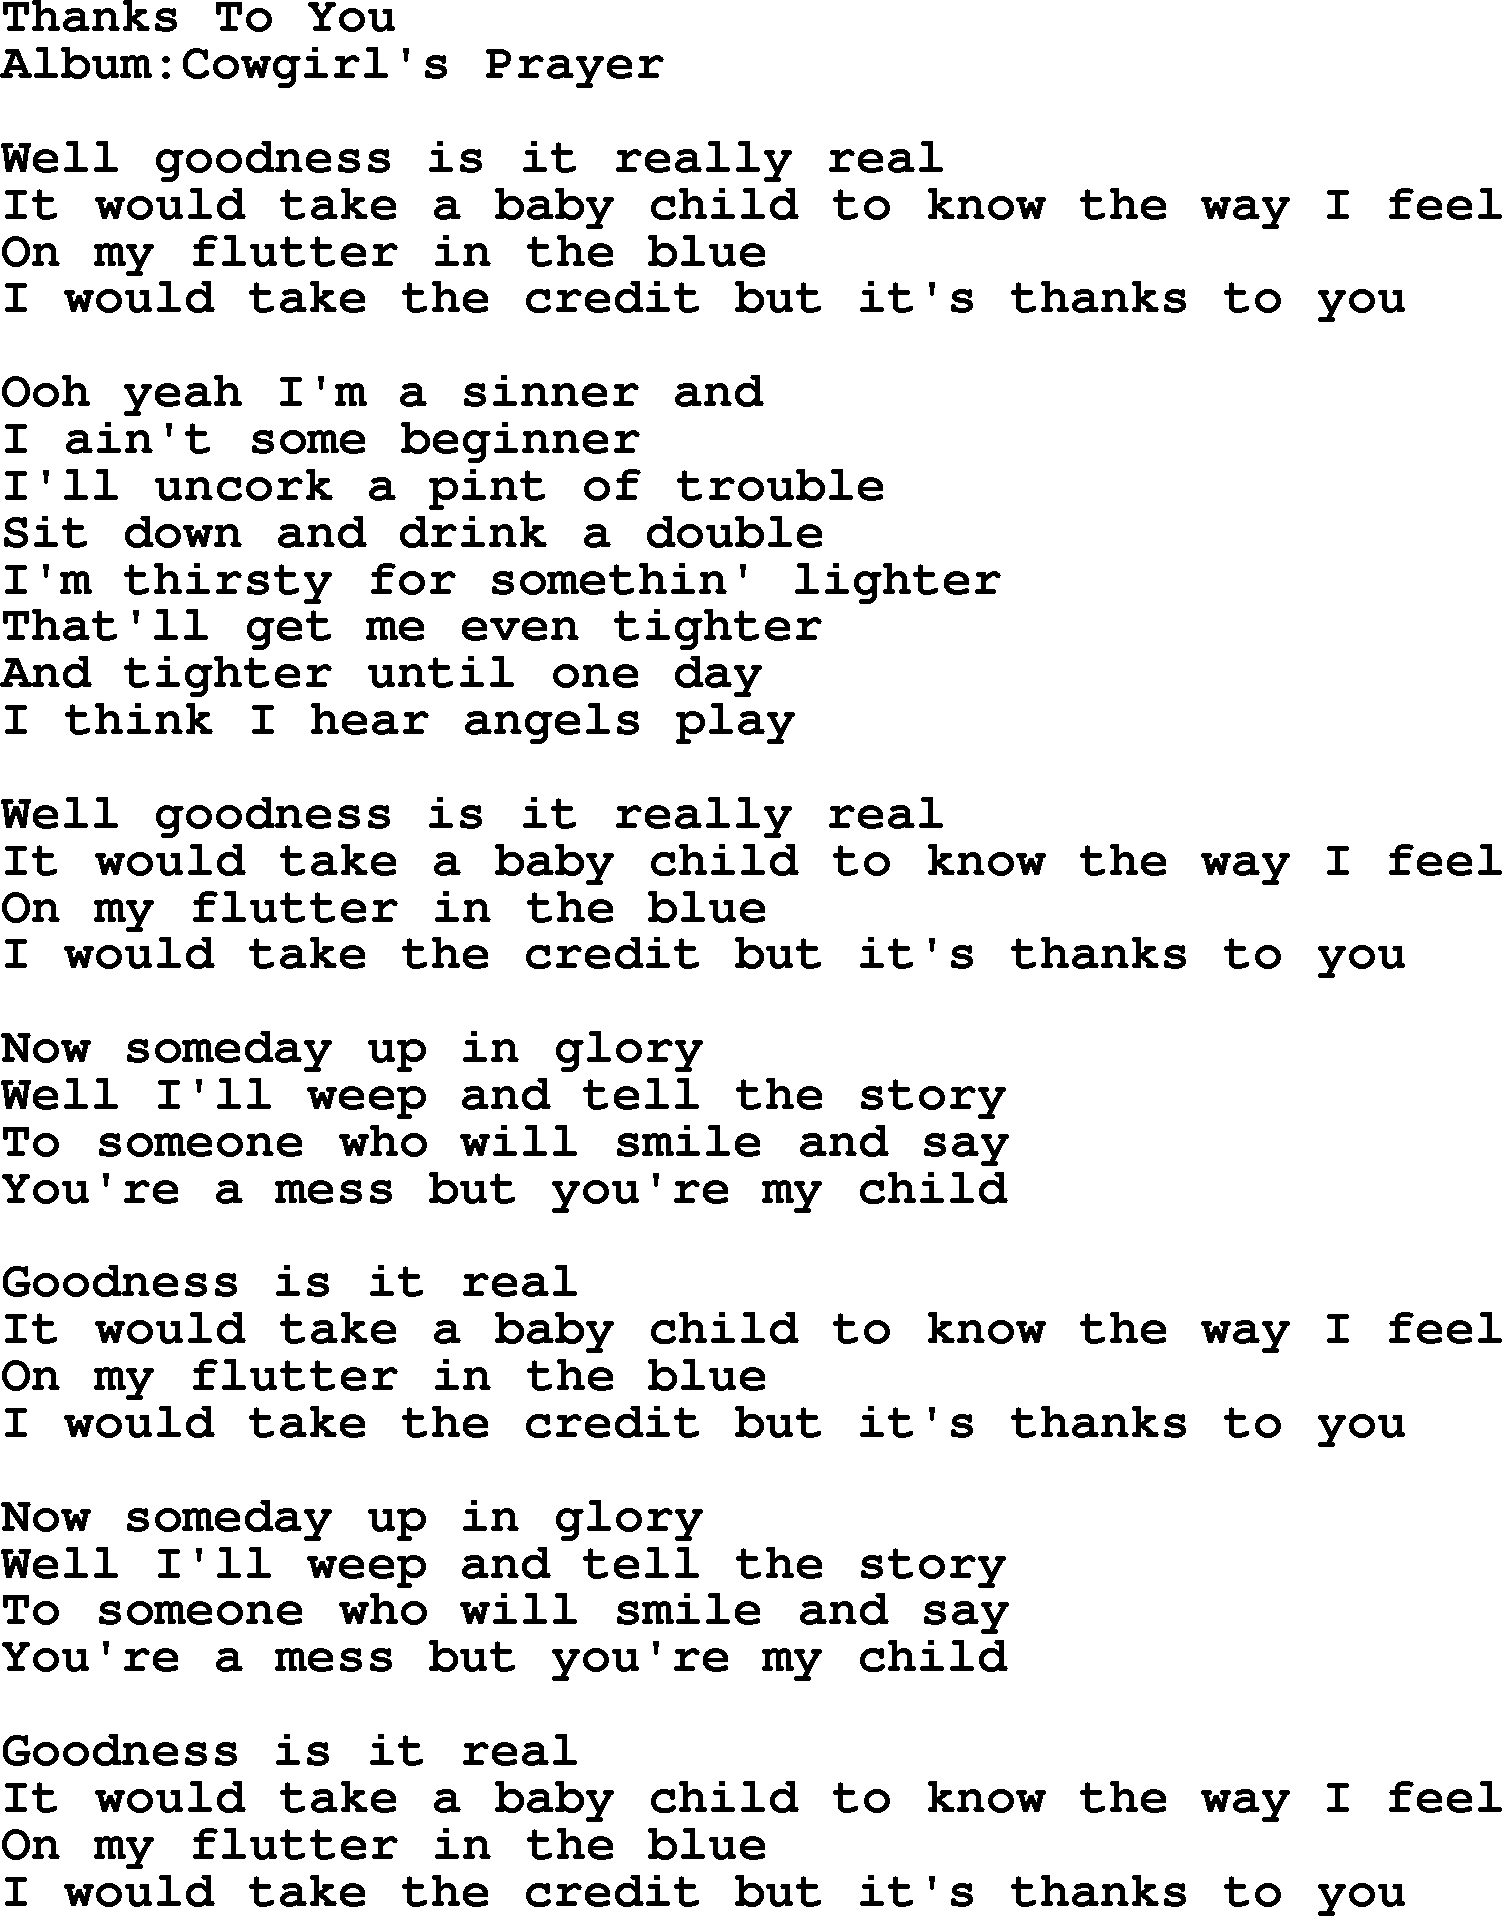 Emmylou Harris song Thanks To You, lyrics